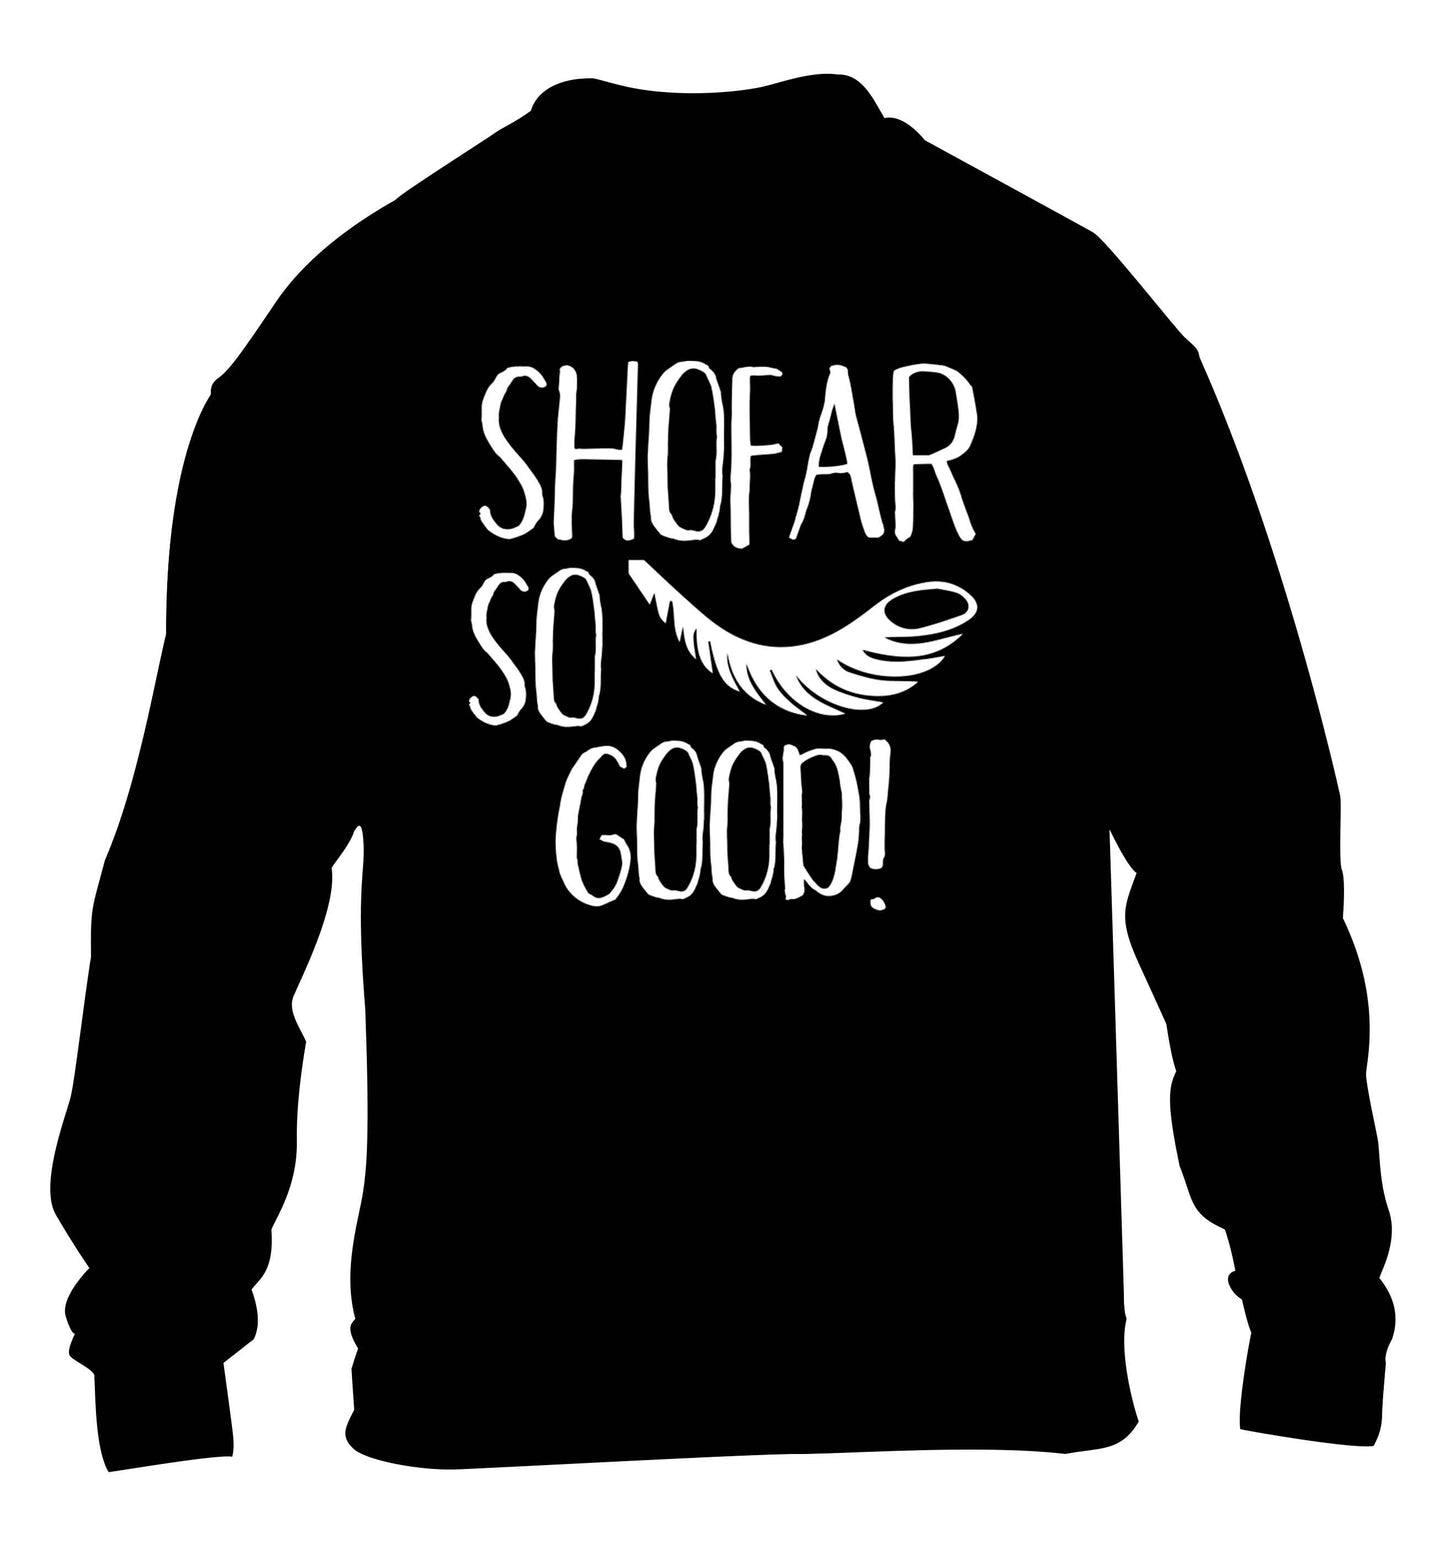 Shofar so good! children's black sweater 12-13 Years